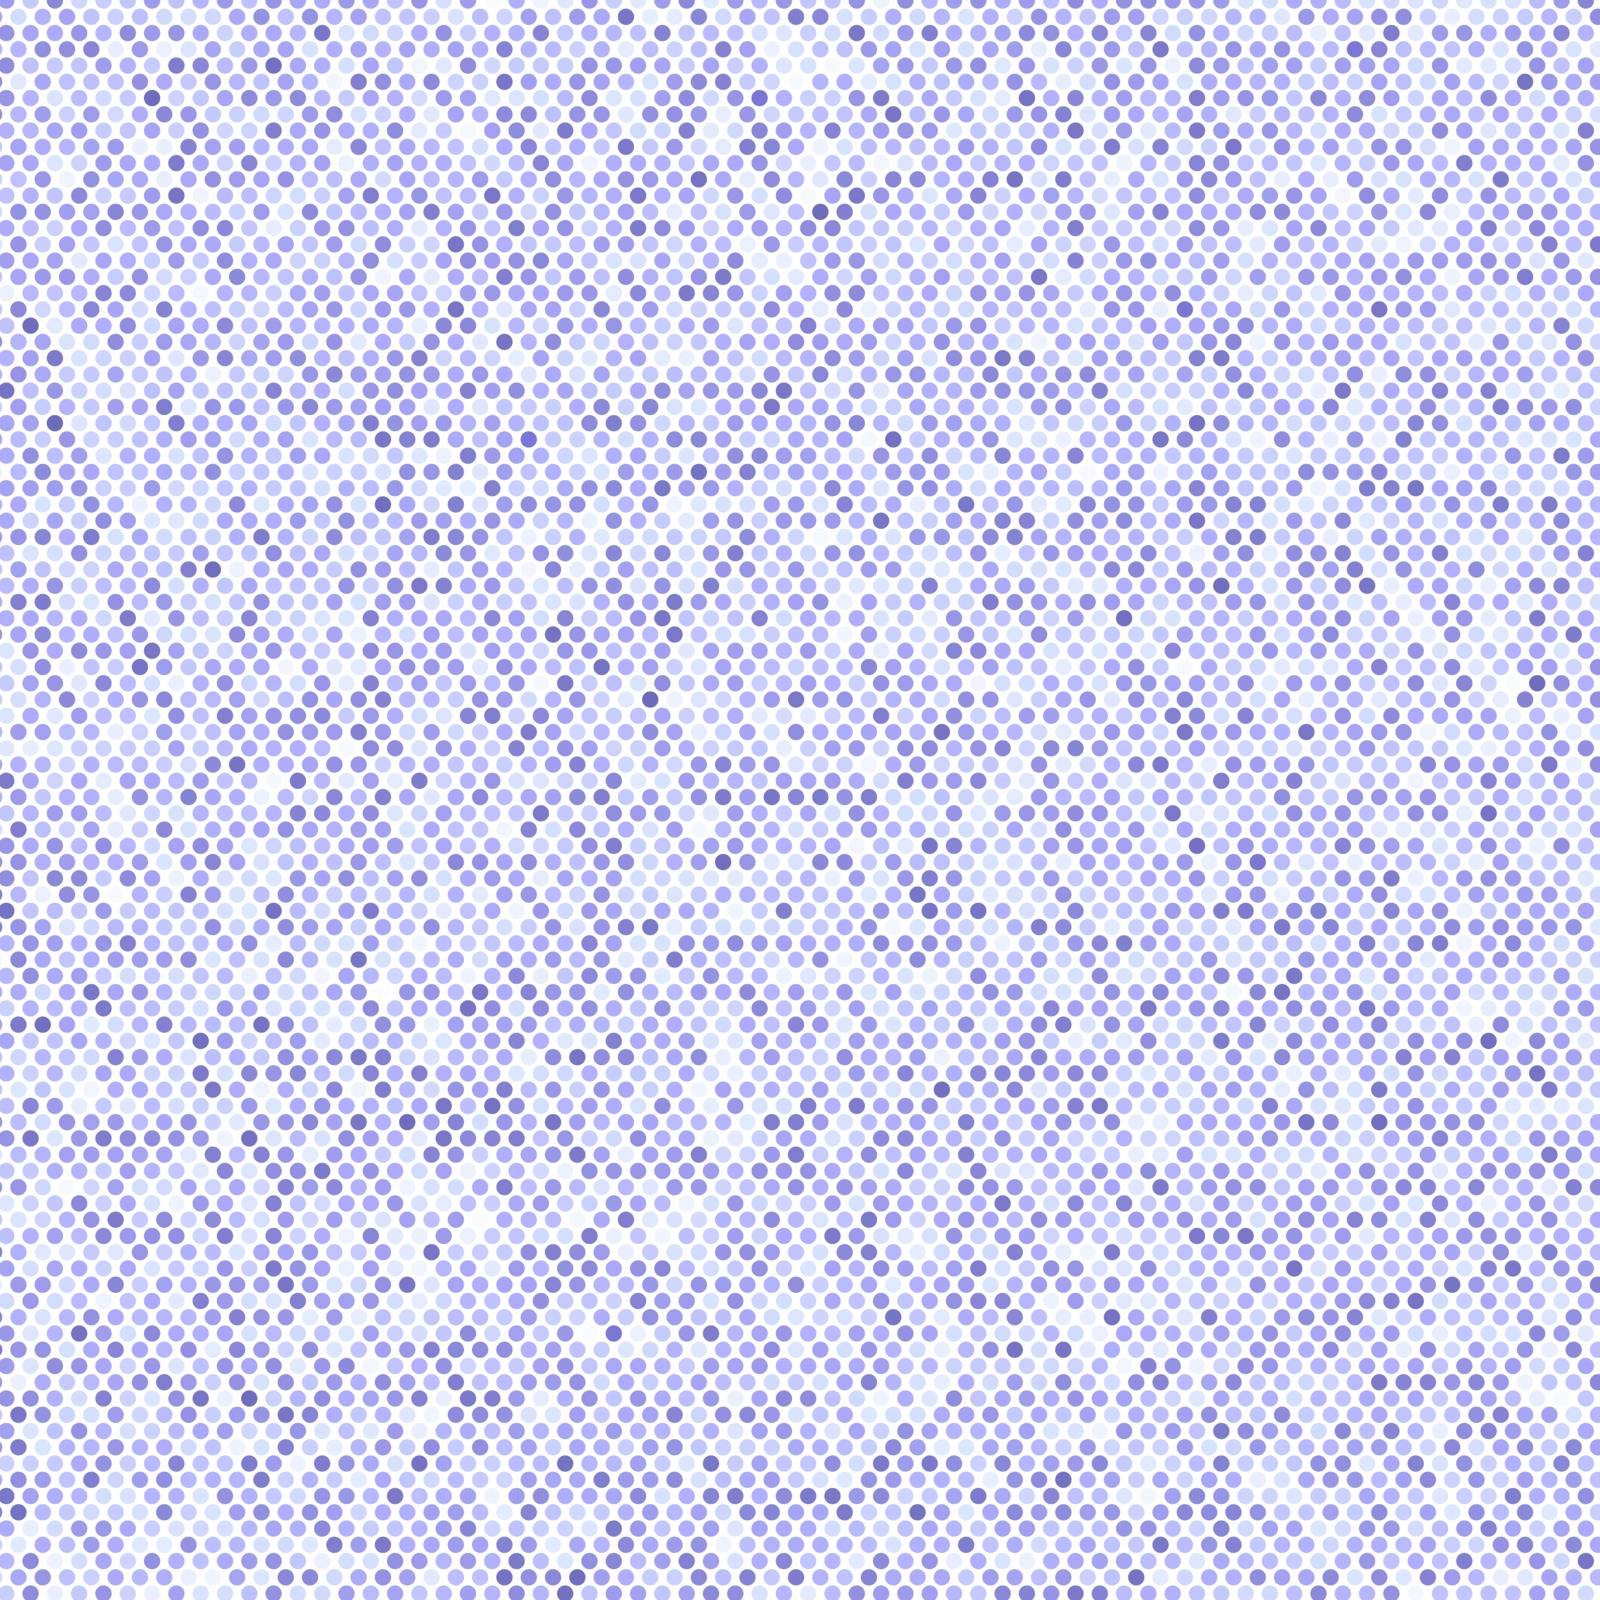 Blue Halftone Pattern. Dotted Background by valeo5